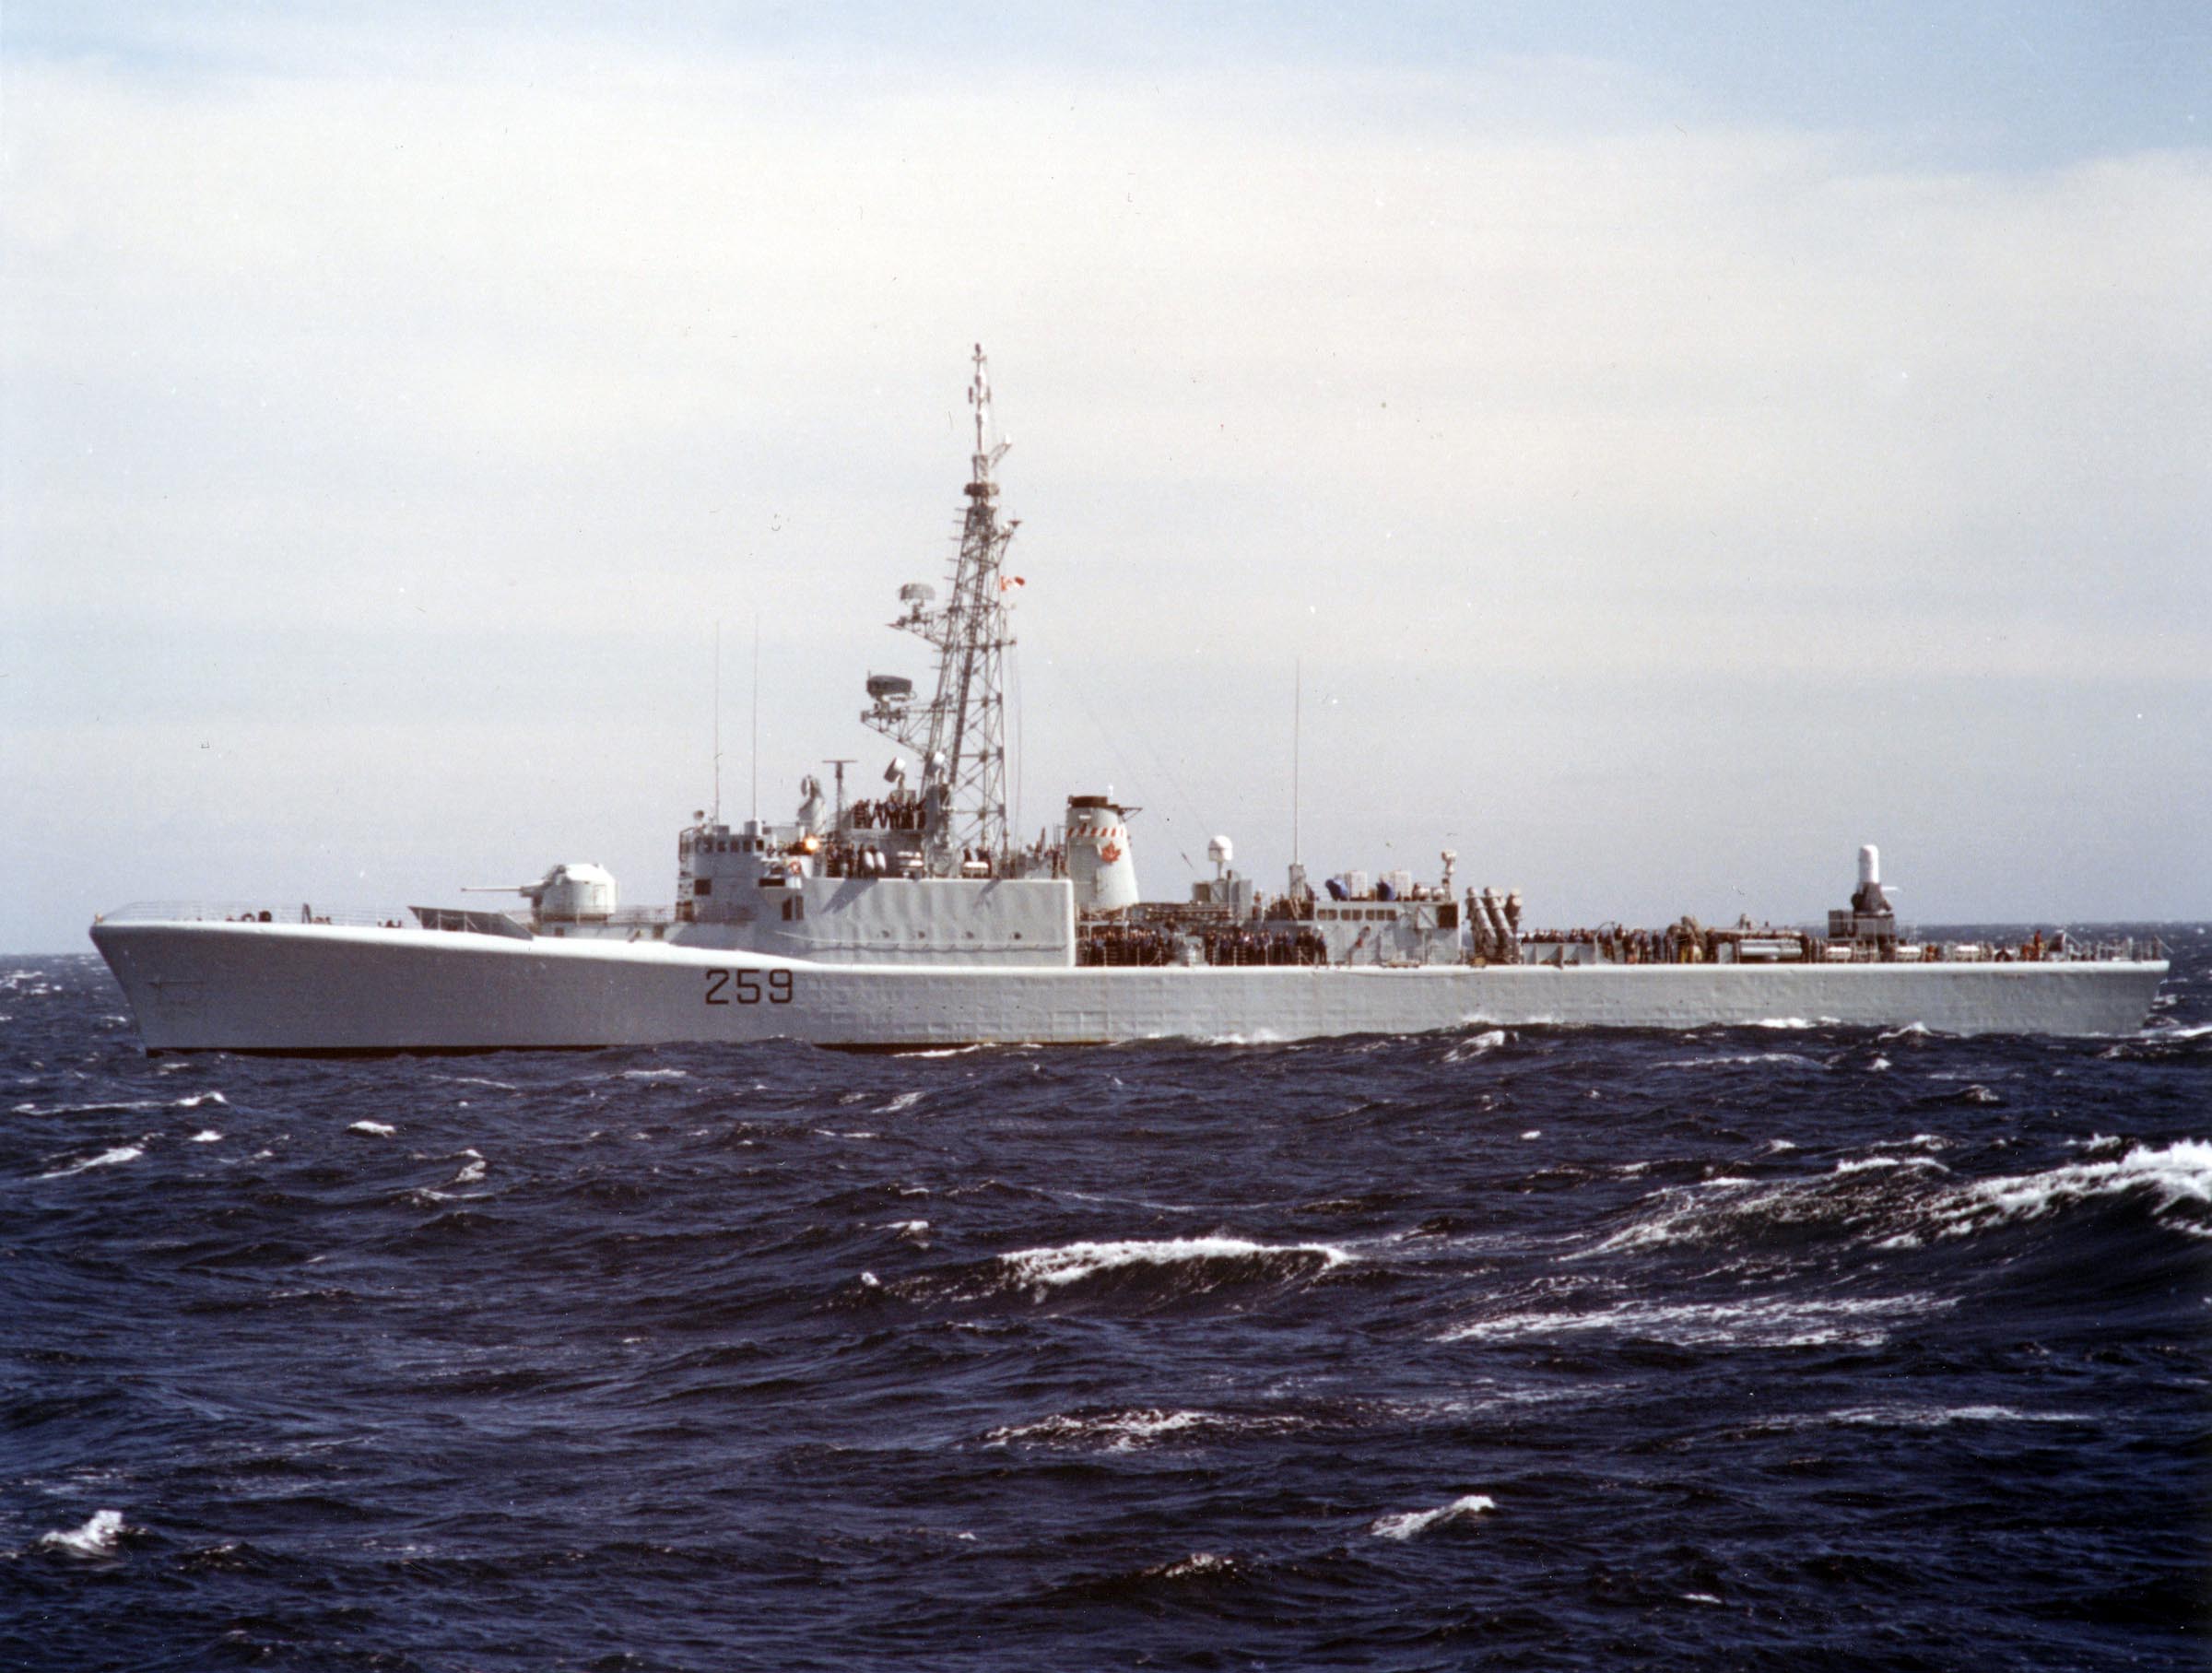 HMCS TERRA NOVA